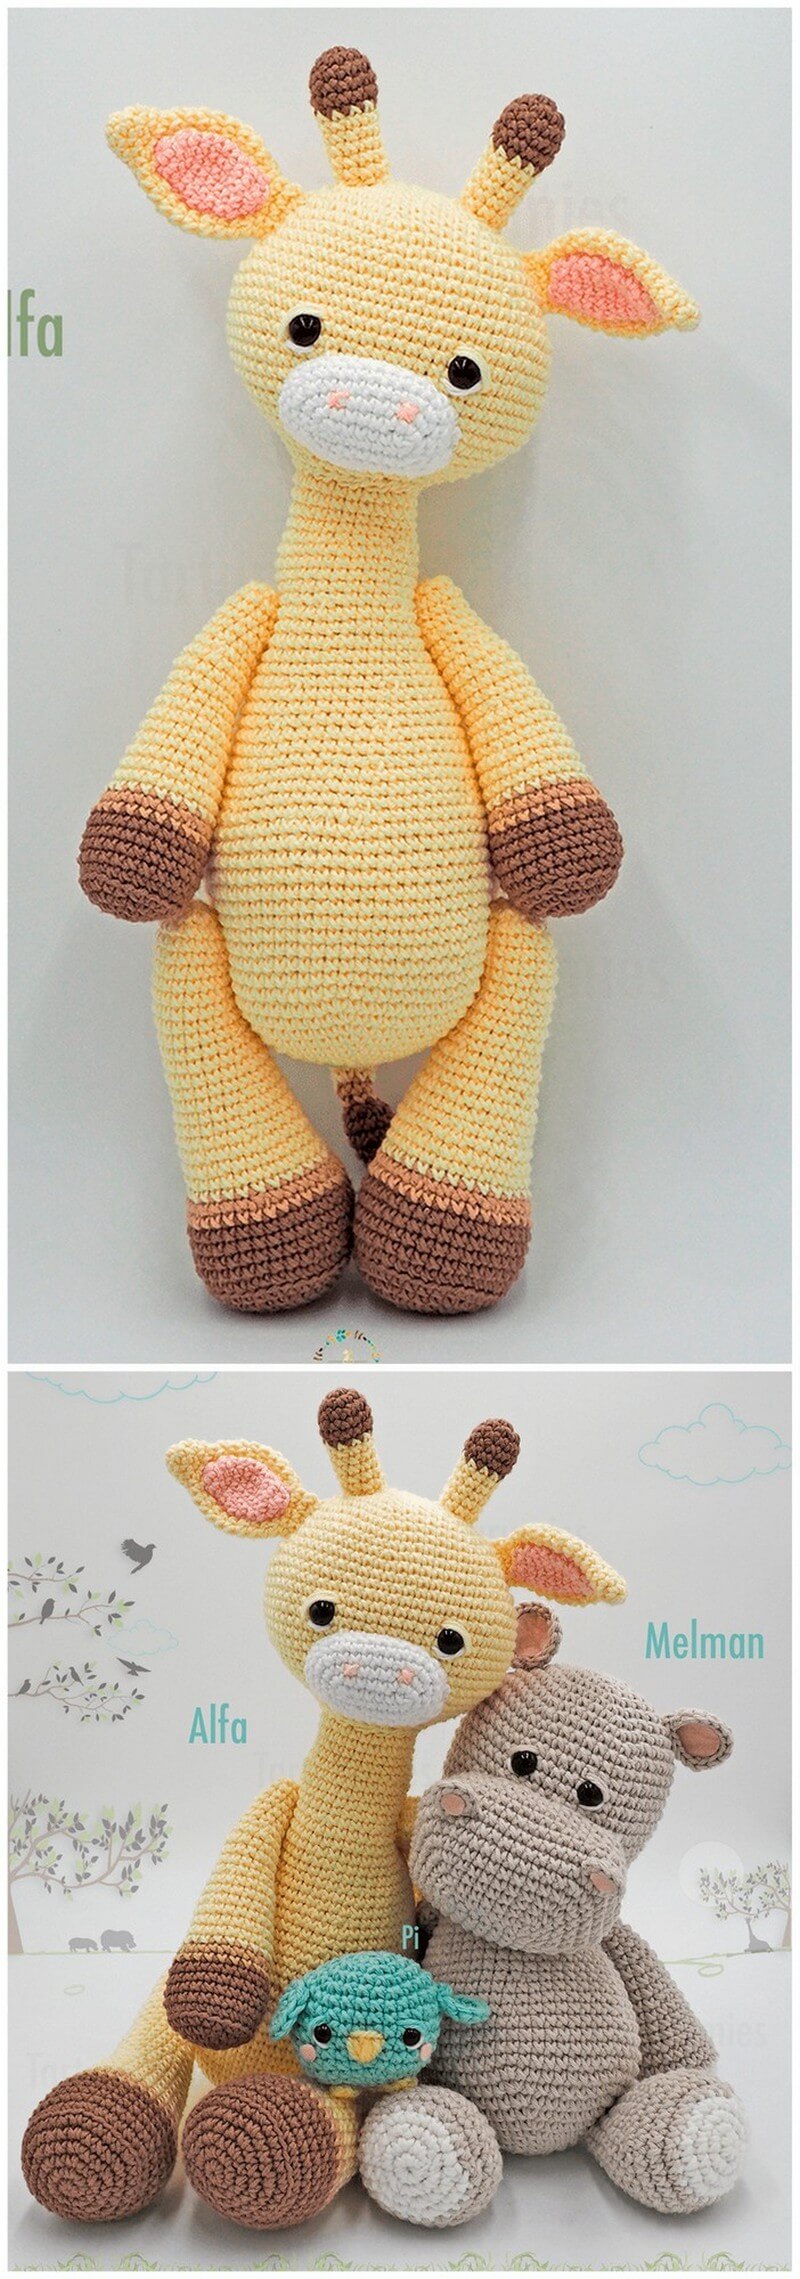 Crochet Amigurumi Pattern (7)